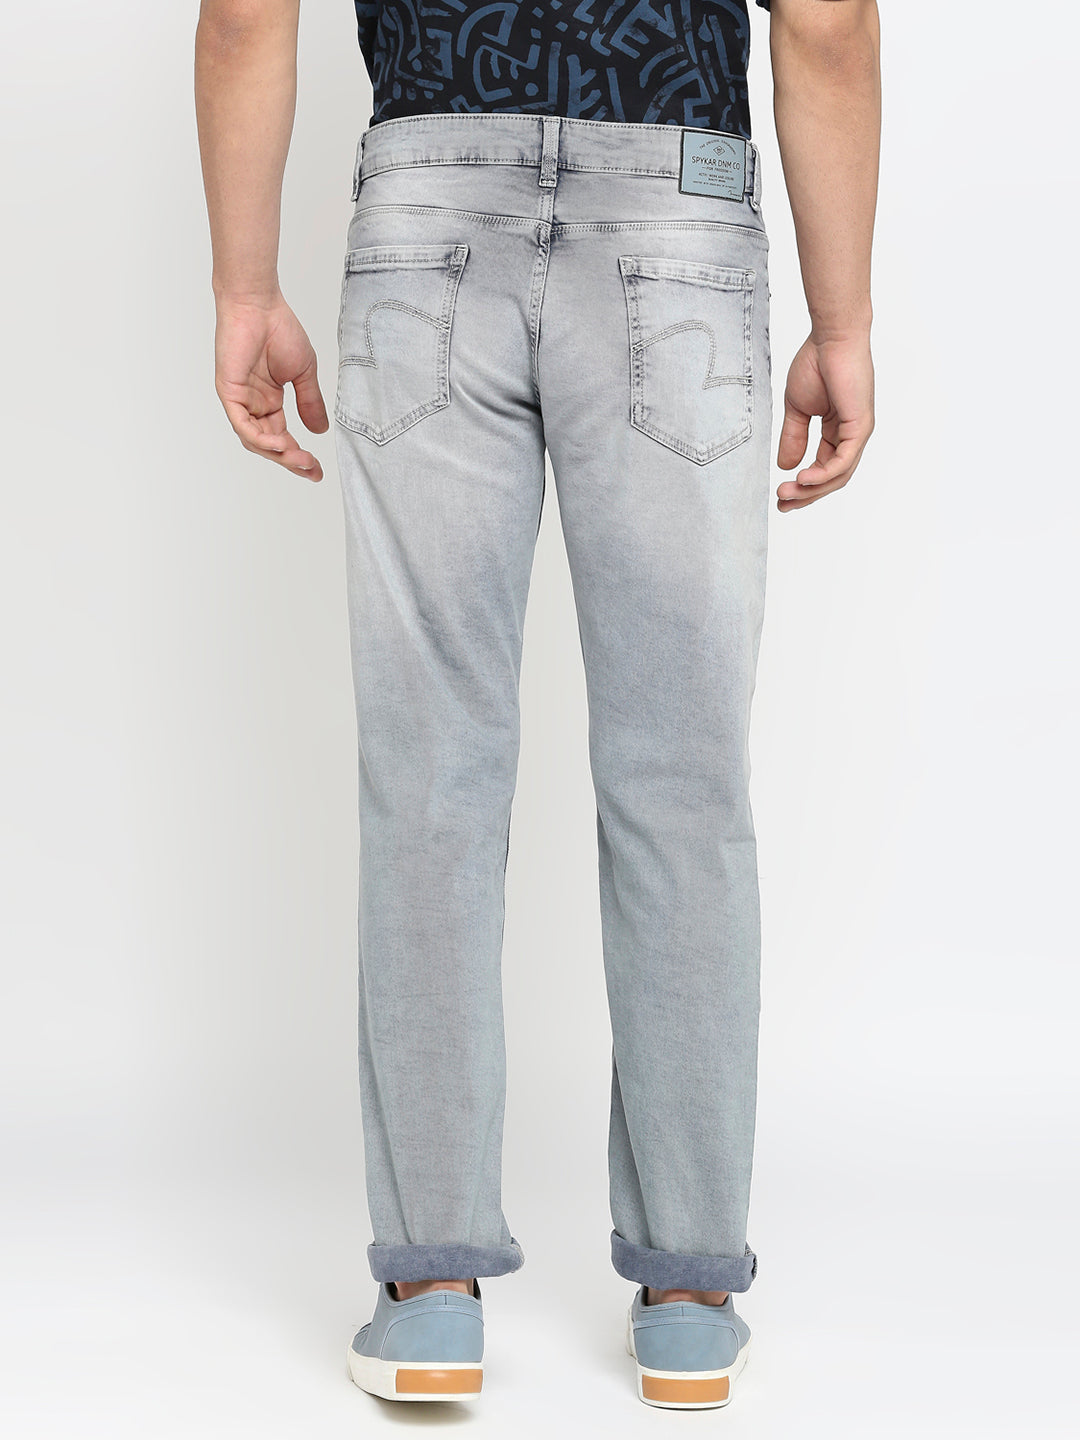 Spykar Light Grey Cotton Comfort Fit Straight Length Jeans For Men (Ricardo)